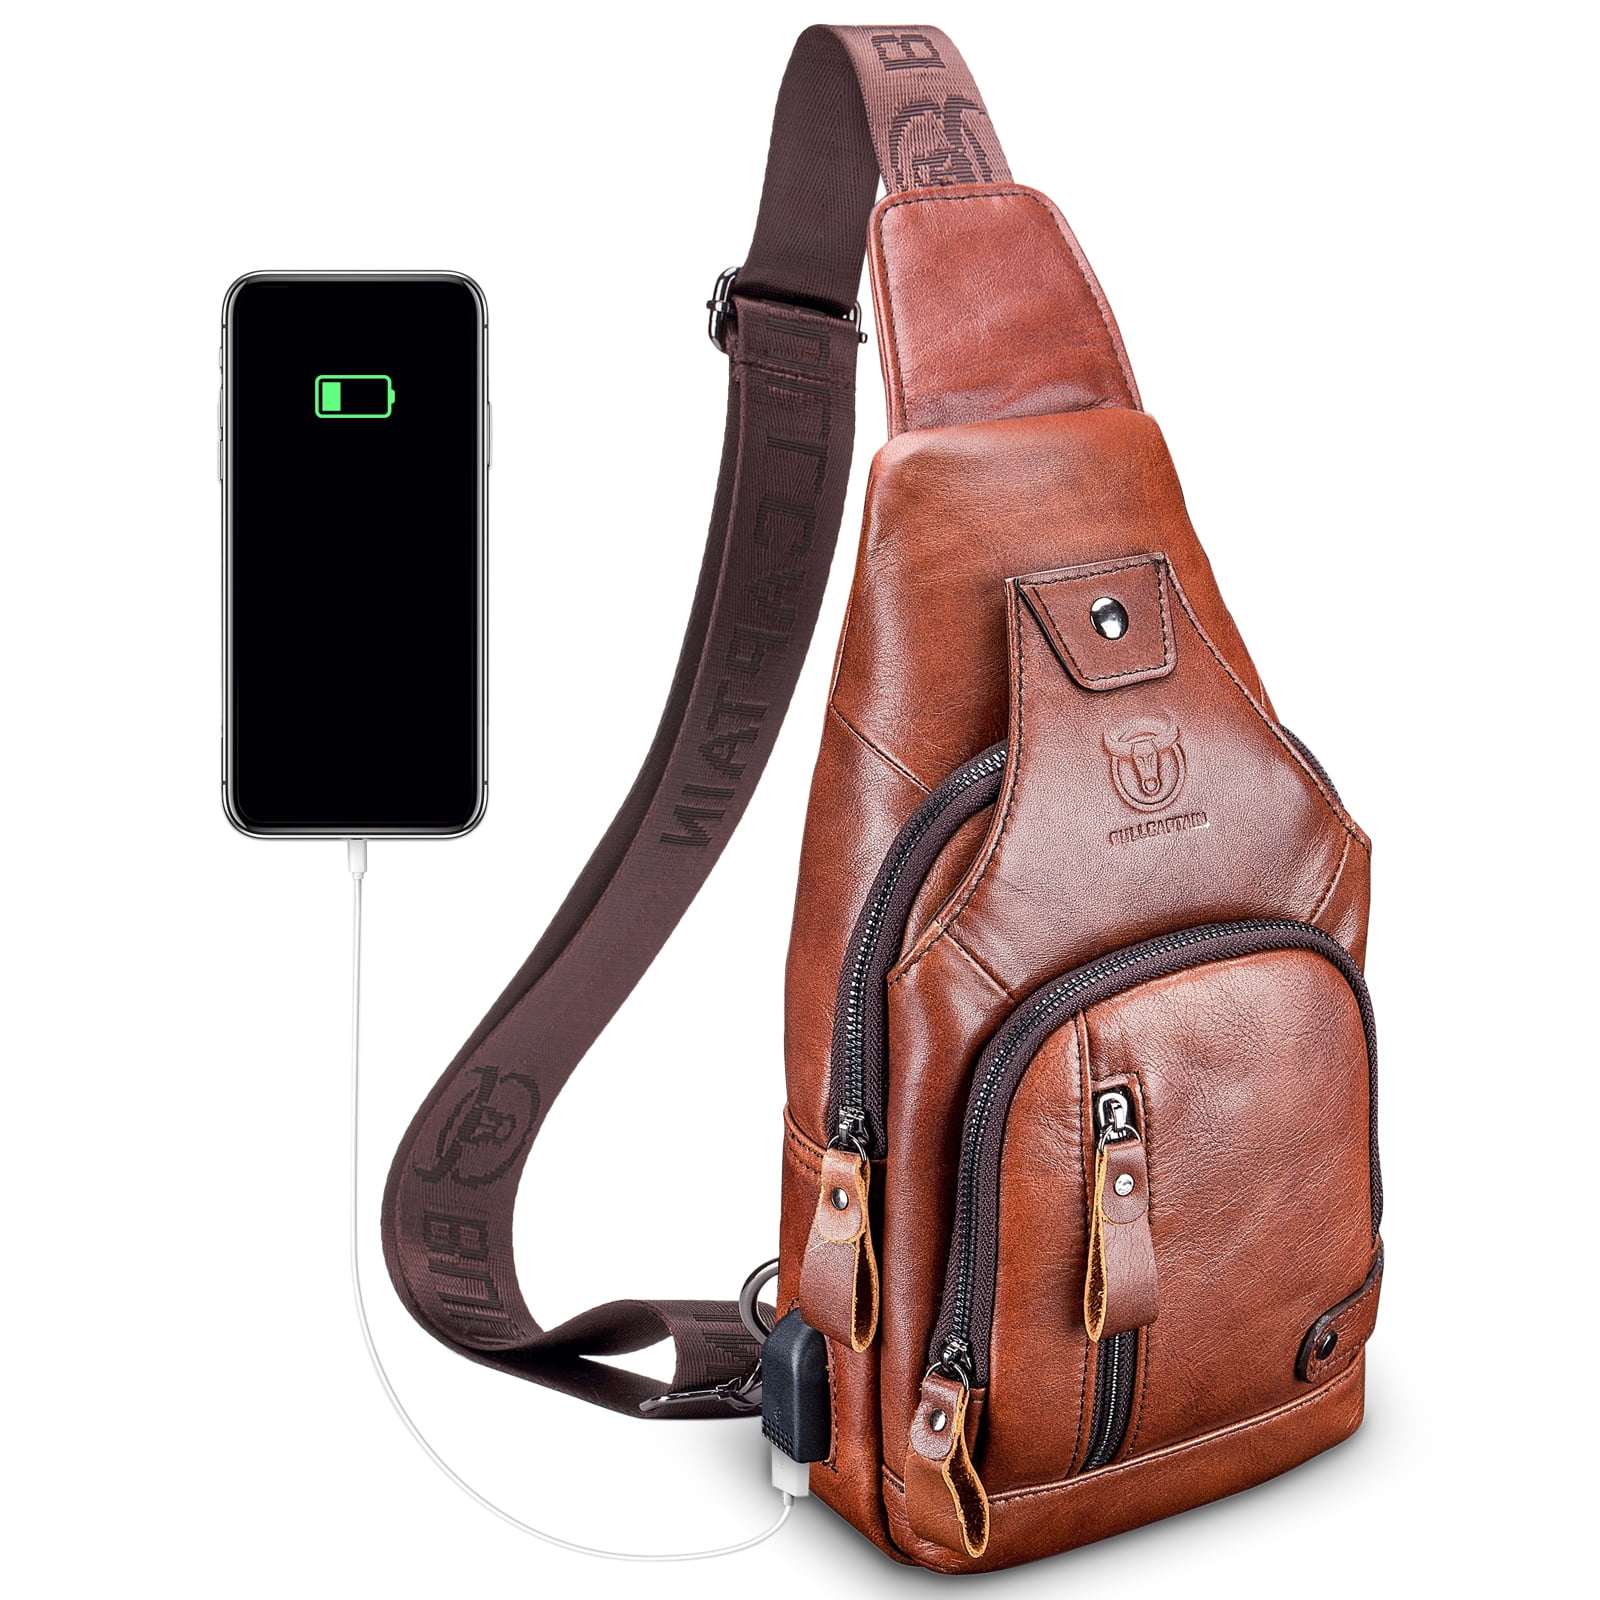 Mens Leather Crossbody Bag Shoulder Sling Bag Casual Daypacks Chest Bags for Travel Hiking Backpacks Black 